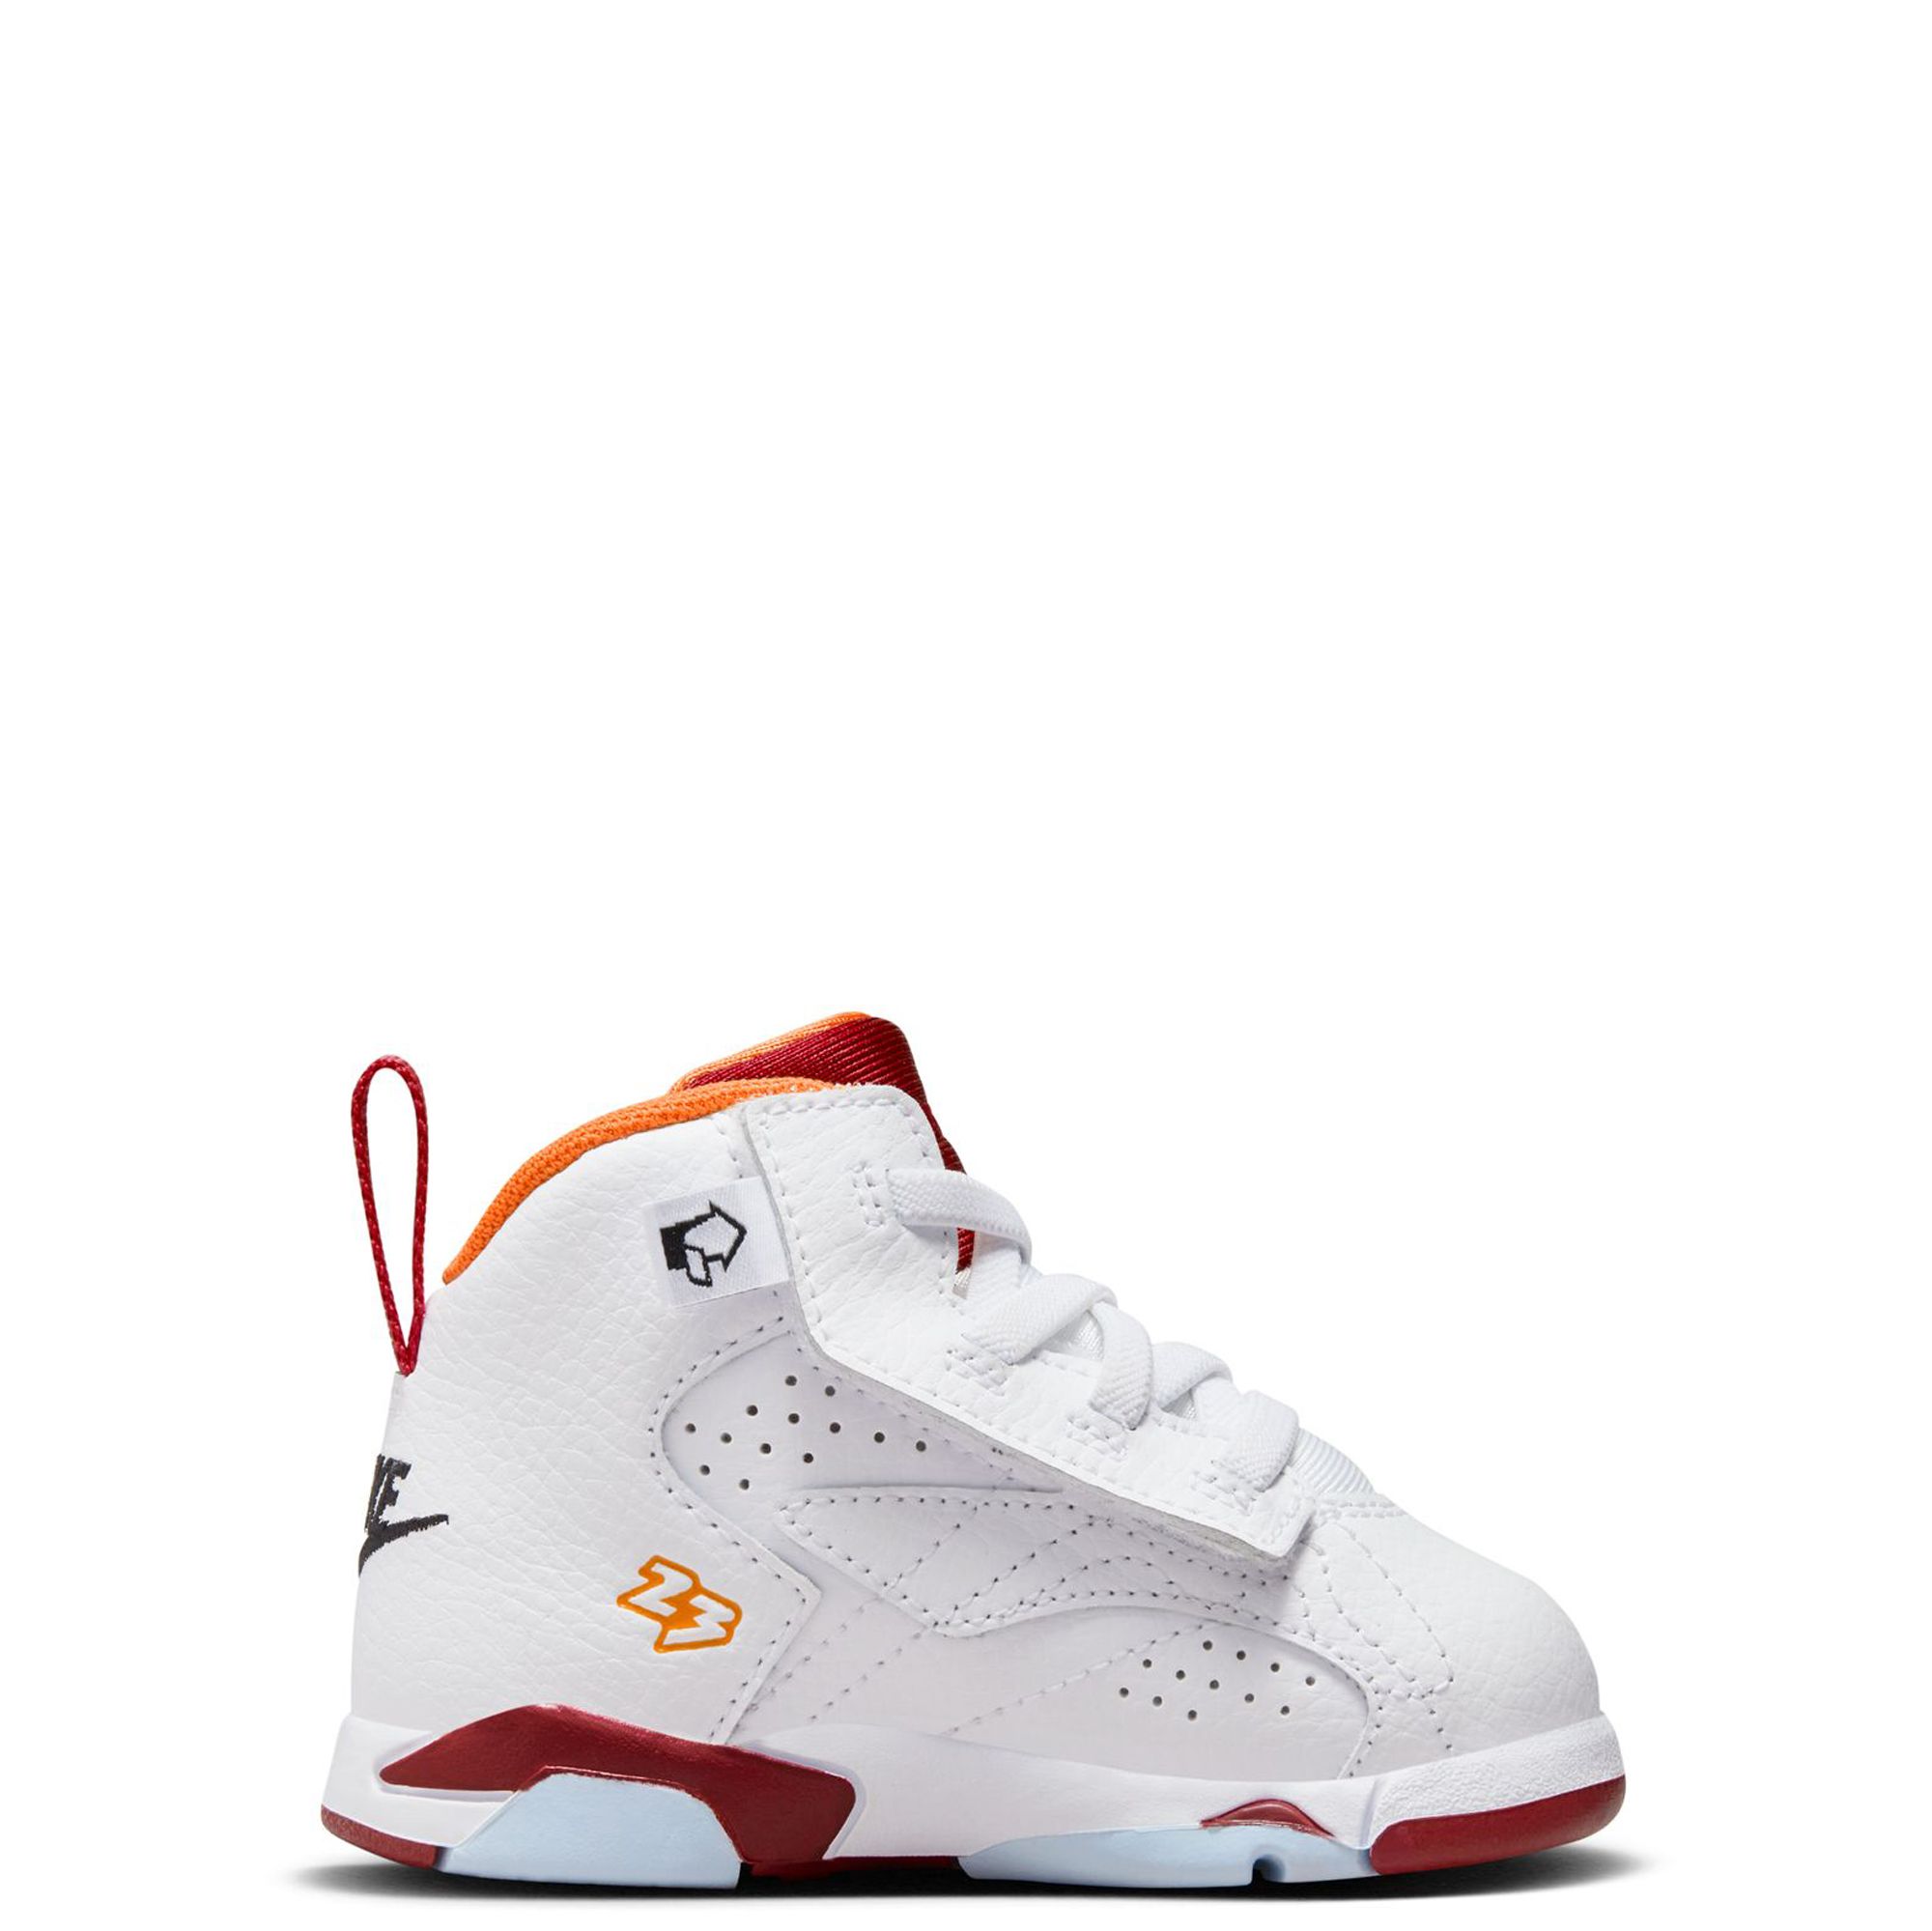 Jordan JORDAN UNISEX - Zapatillas de baloncesto - white/cardinal red/vivid  orange/black/blanco 